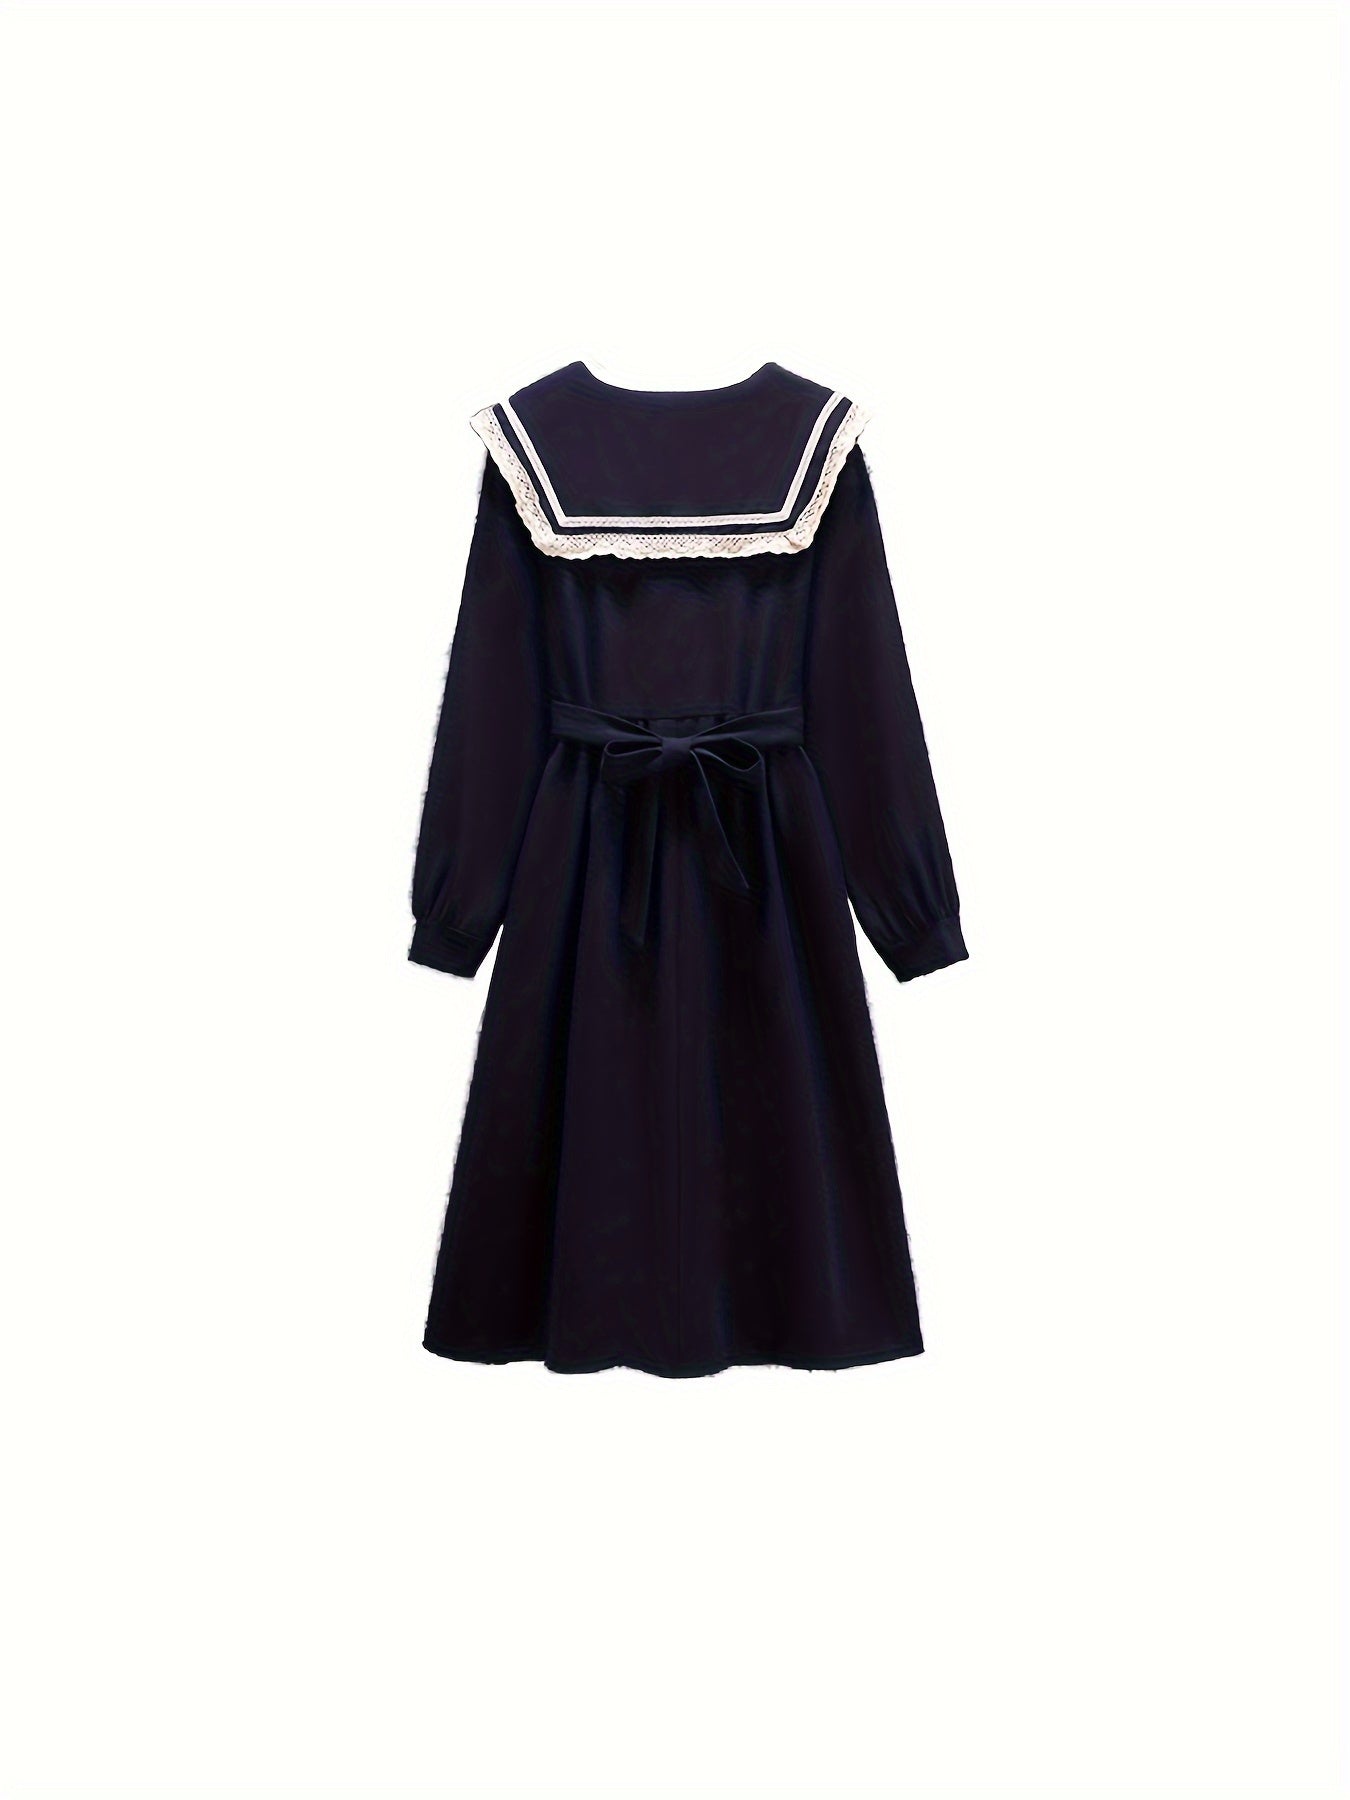 Vzyzv Contrast Trim Sailor Collar Belted Dress, Preppy Long Sleeve Ruffle Hem Aline Dress For Spring & Fall, Women's Clothing